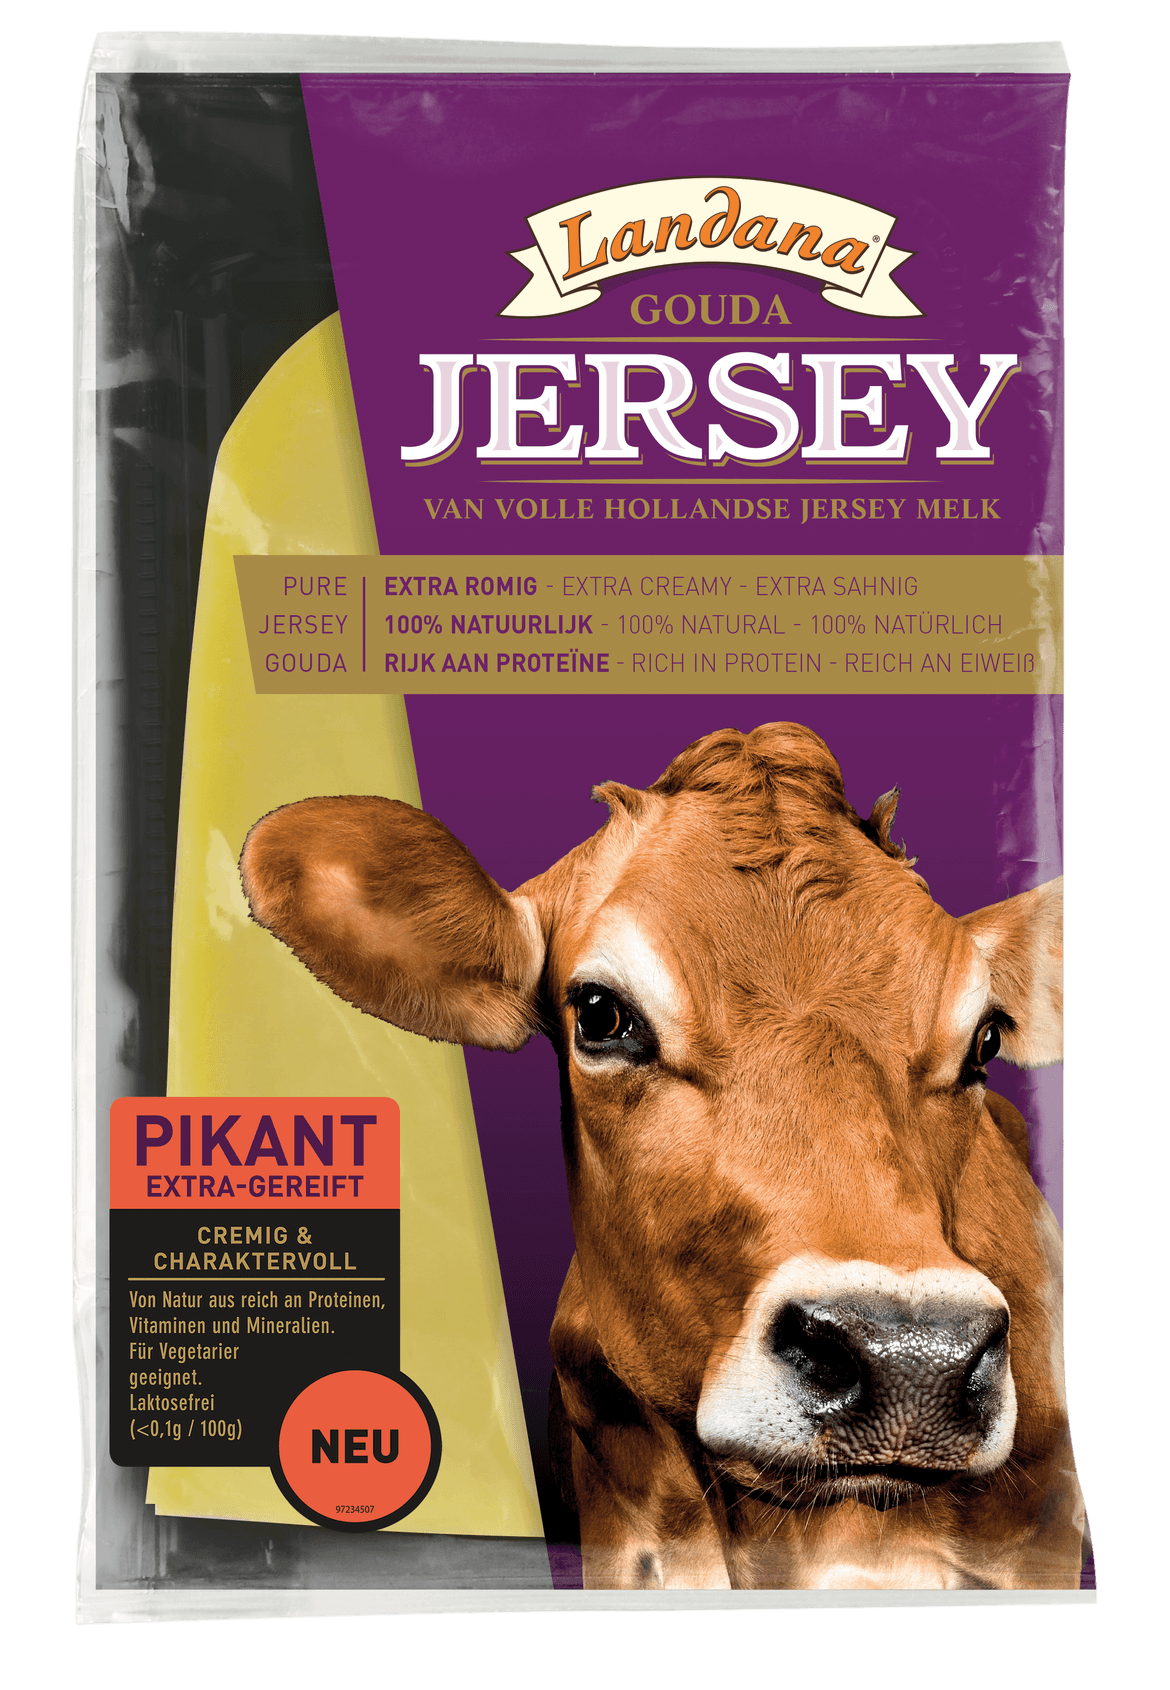 Jersey "Pikant" gouda sajt